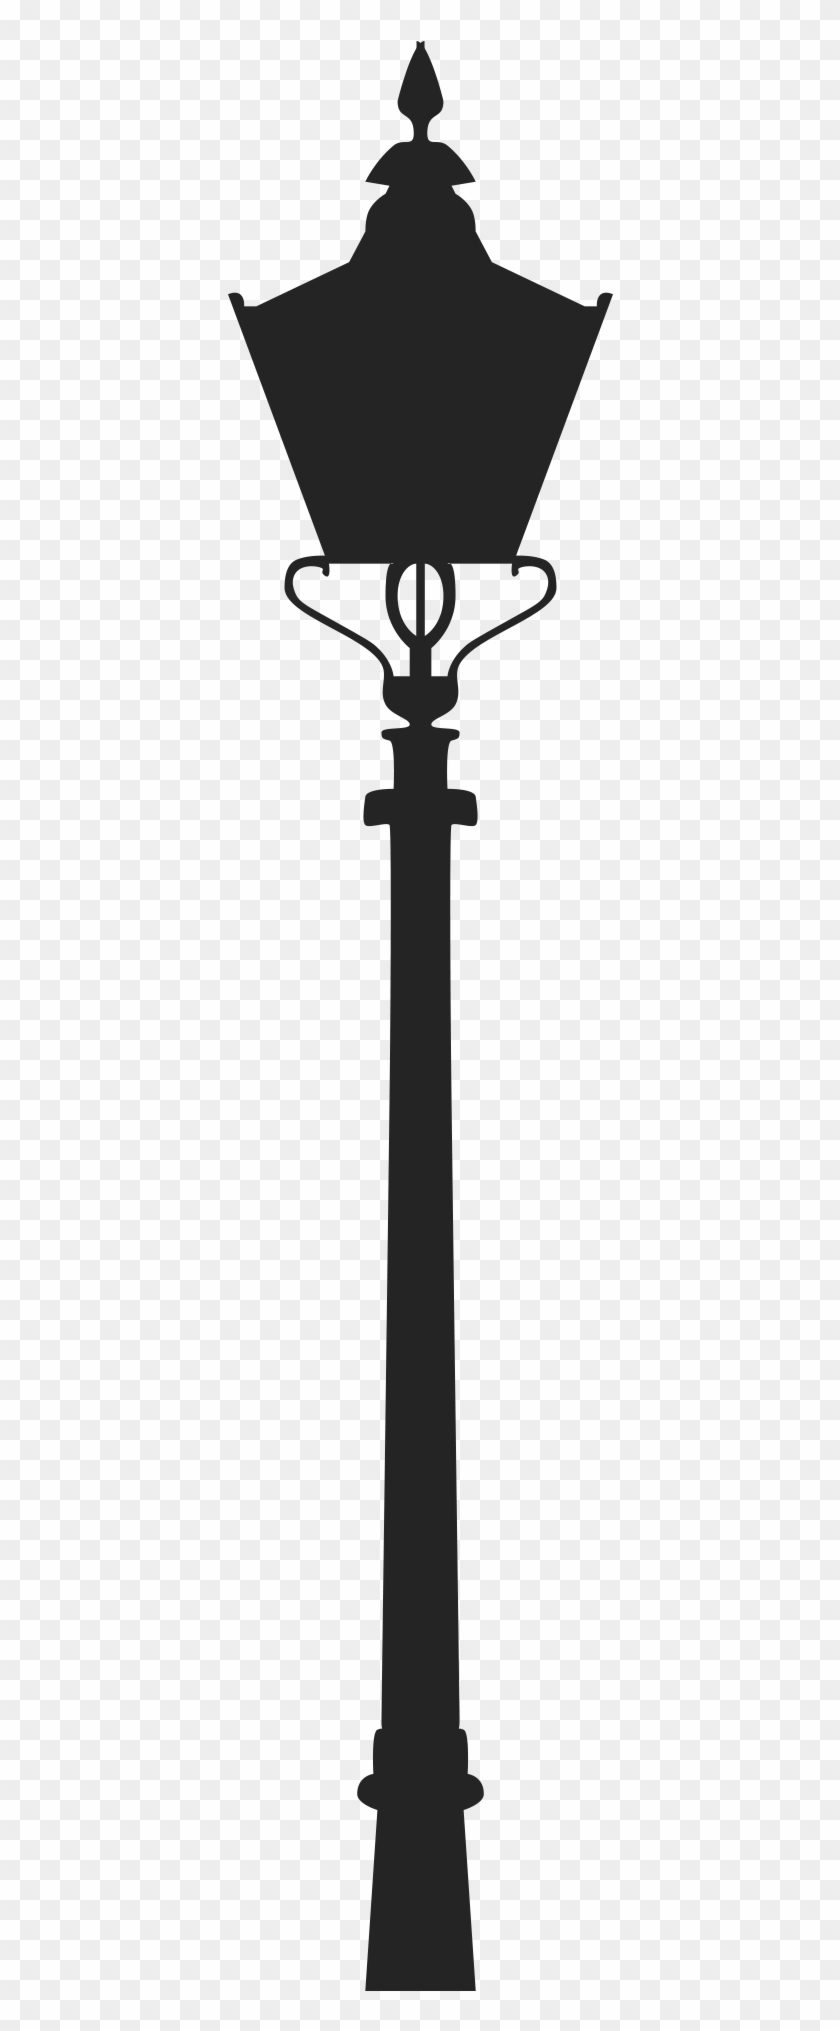 Image Result For Narnia Lamp Post - Narnia Lamppost #600813